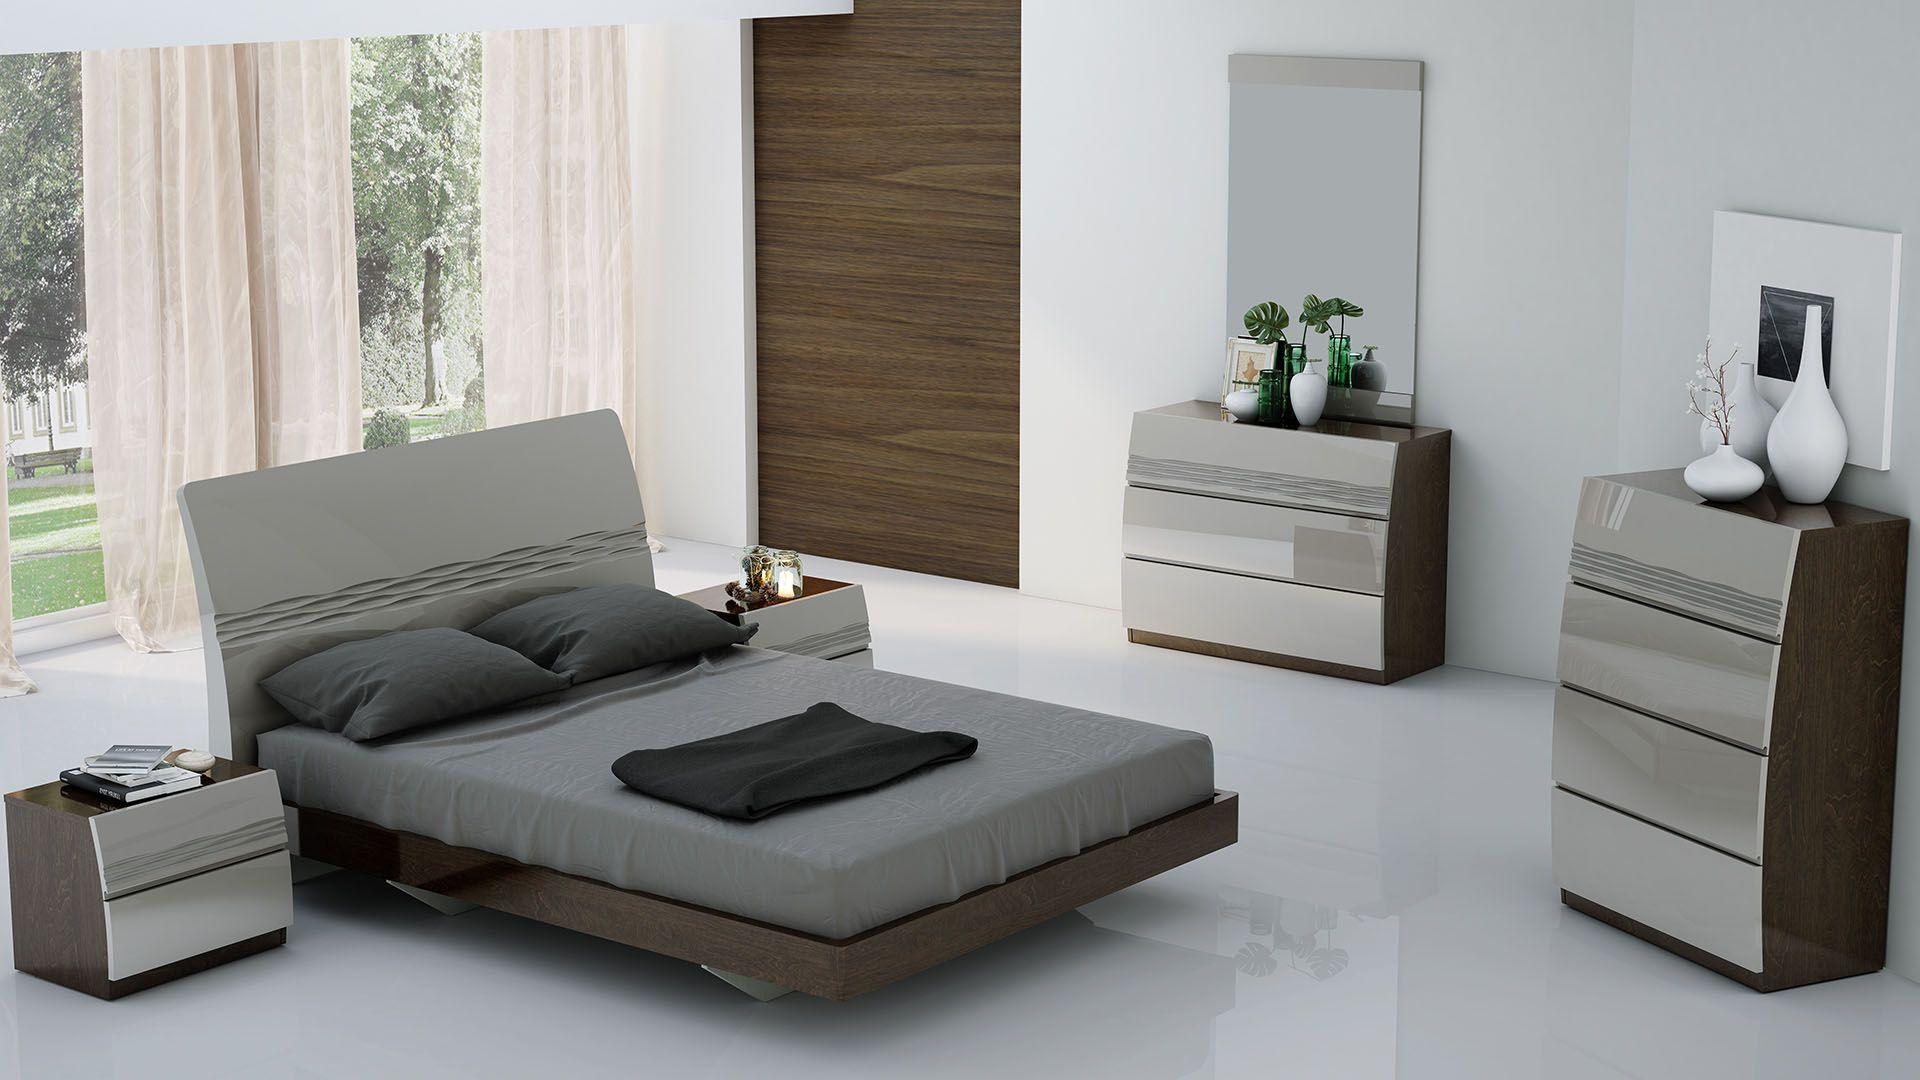 

                    
American Eagle Furniture B-P102-EK Platform Bed Light Gray/Brown  Purchase 
